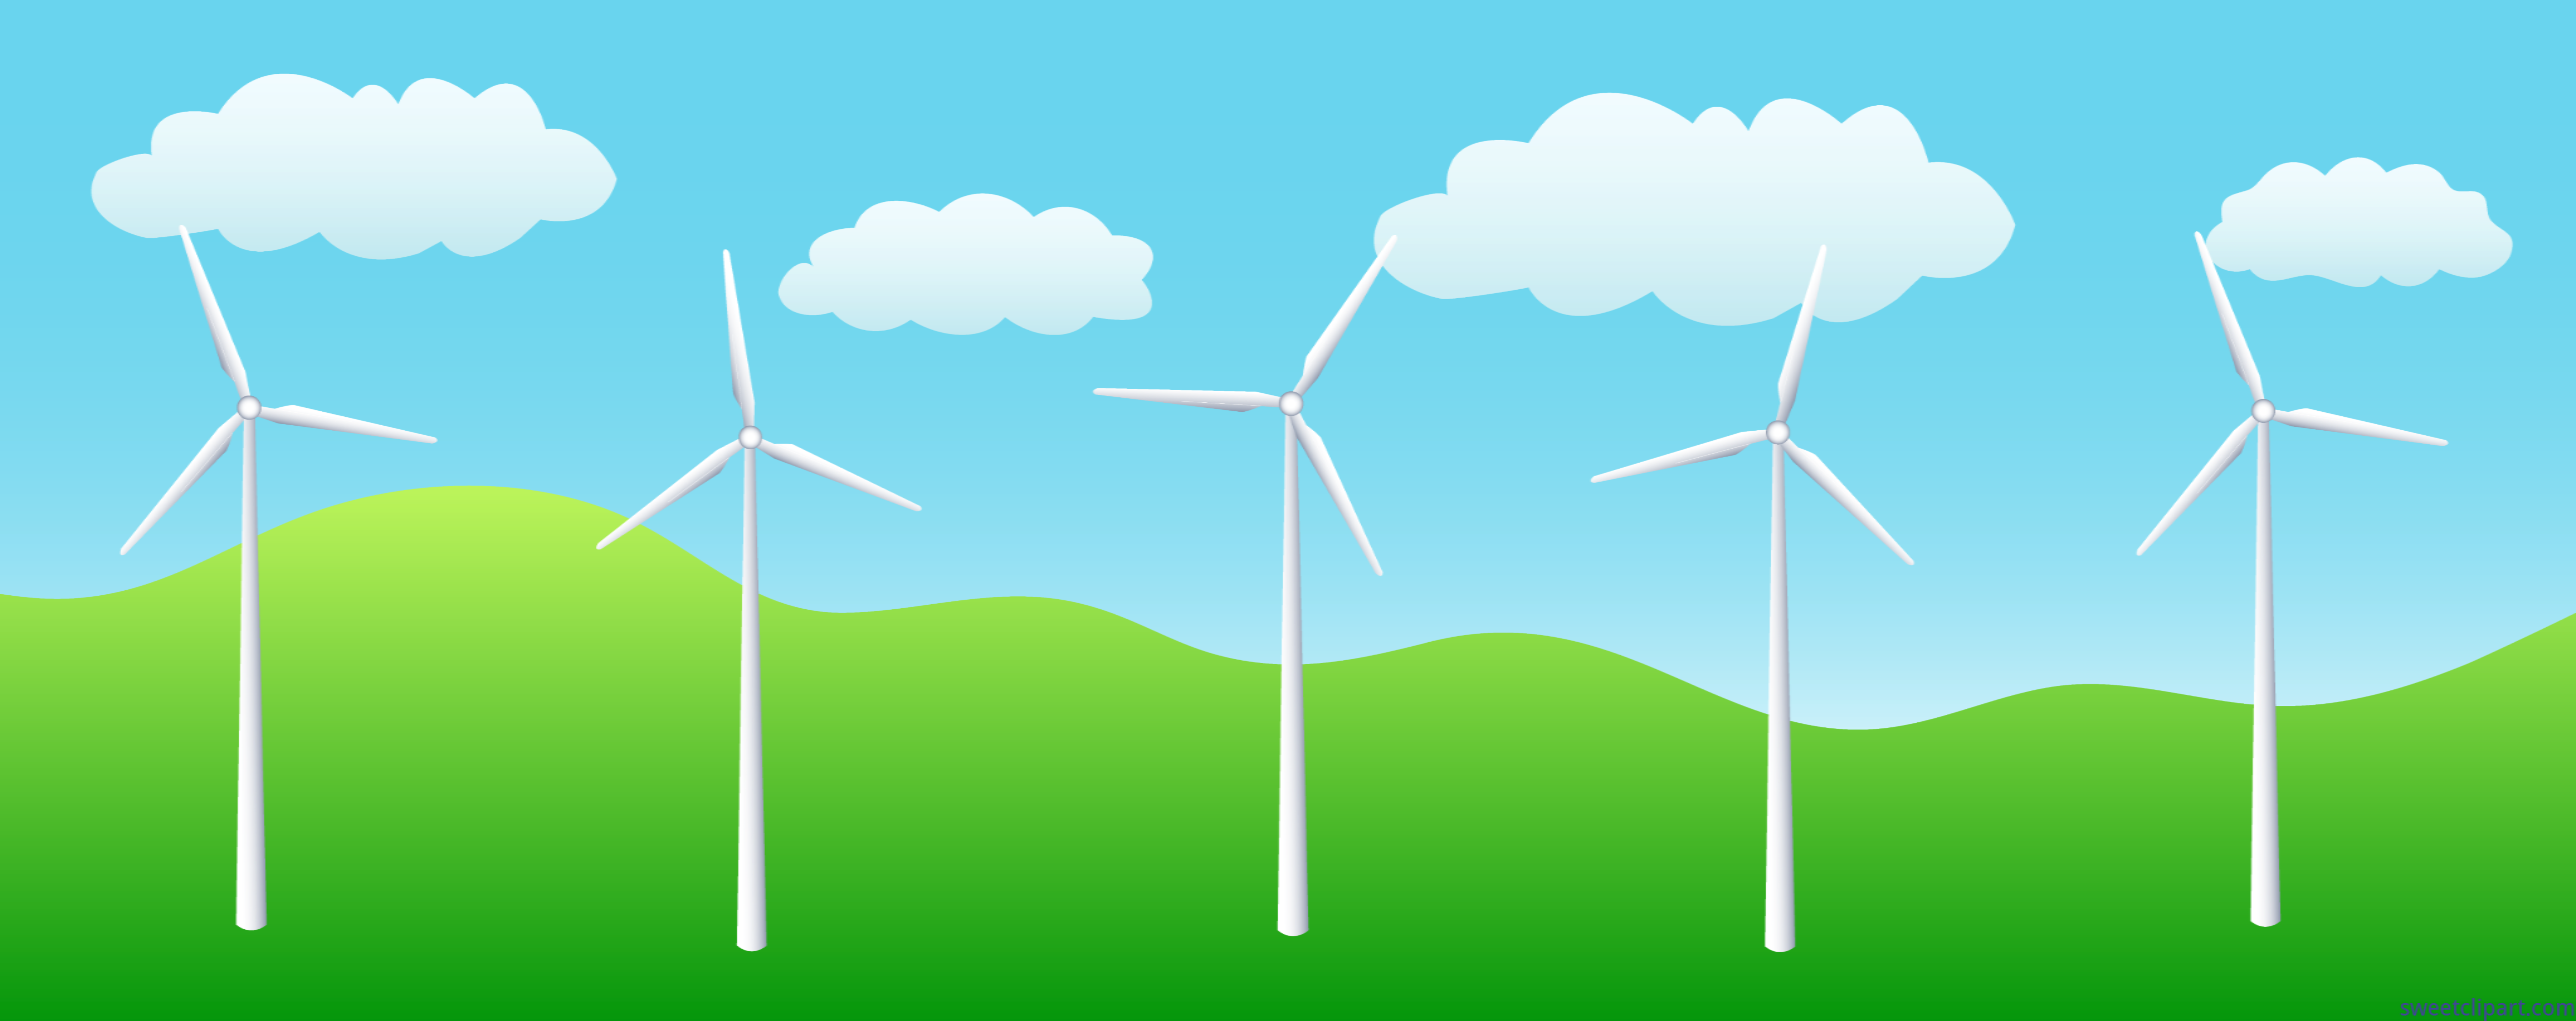 Free Simple Wind Turbines Cli